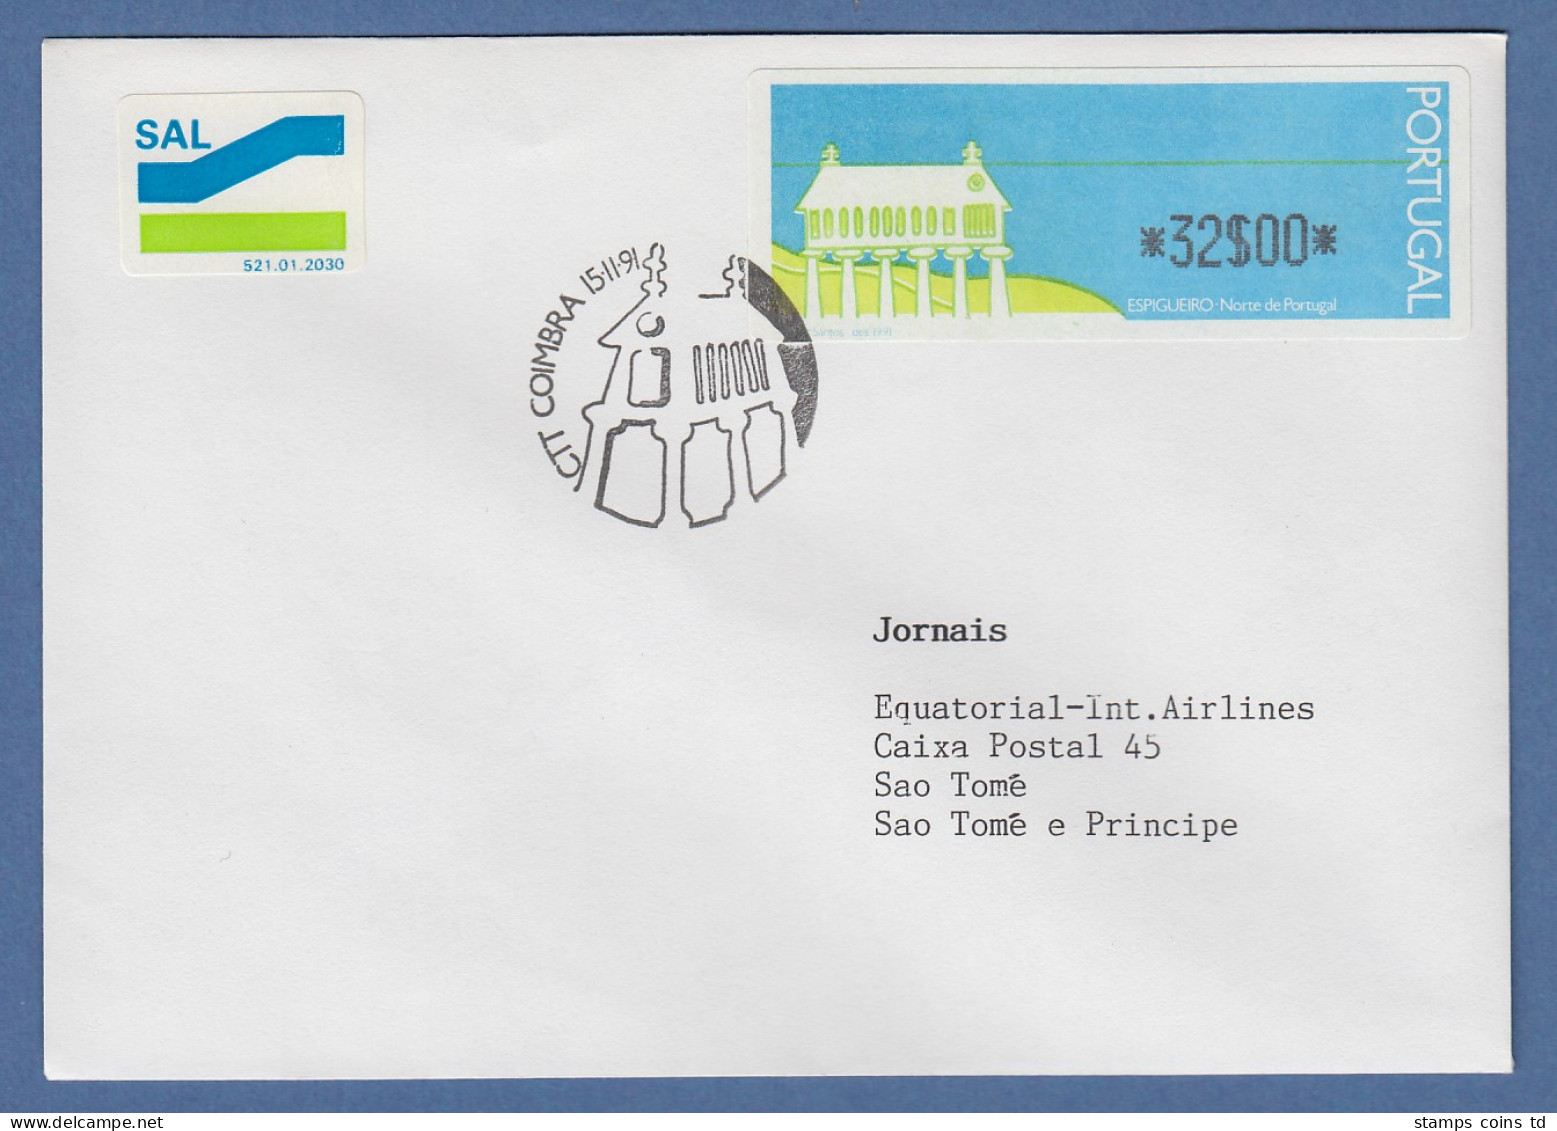 Portugal 1991 ATM Espigueiro Mi.-Nr. 3 Wert 32$00 Auf FDC Mit ET-O Coimbra - Machine Labels [ATM]